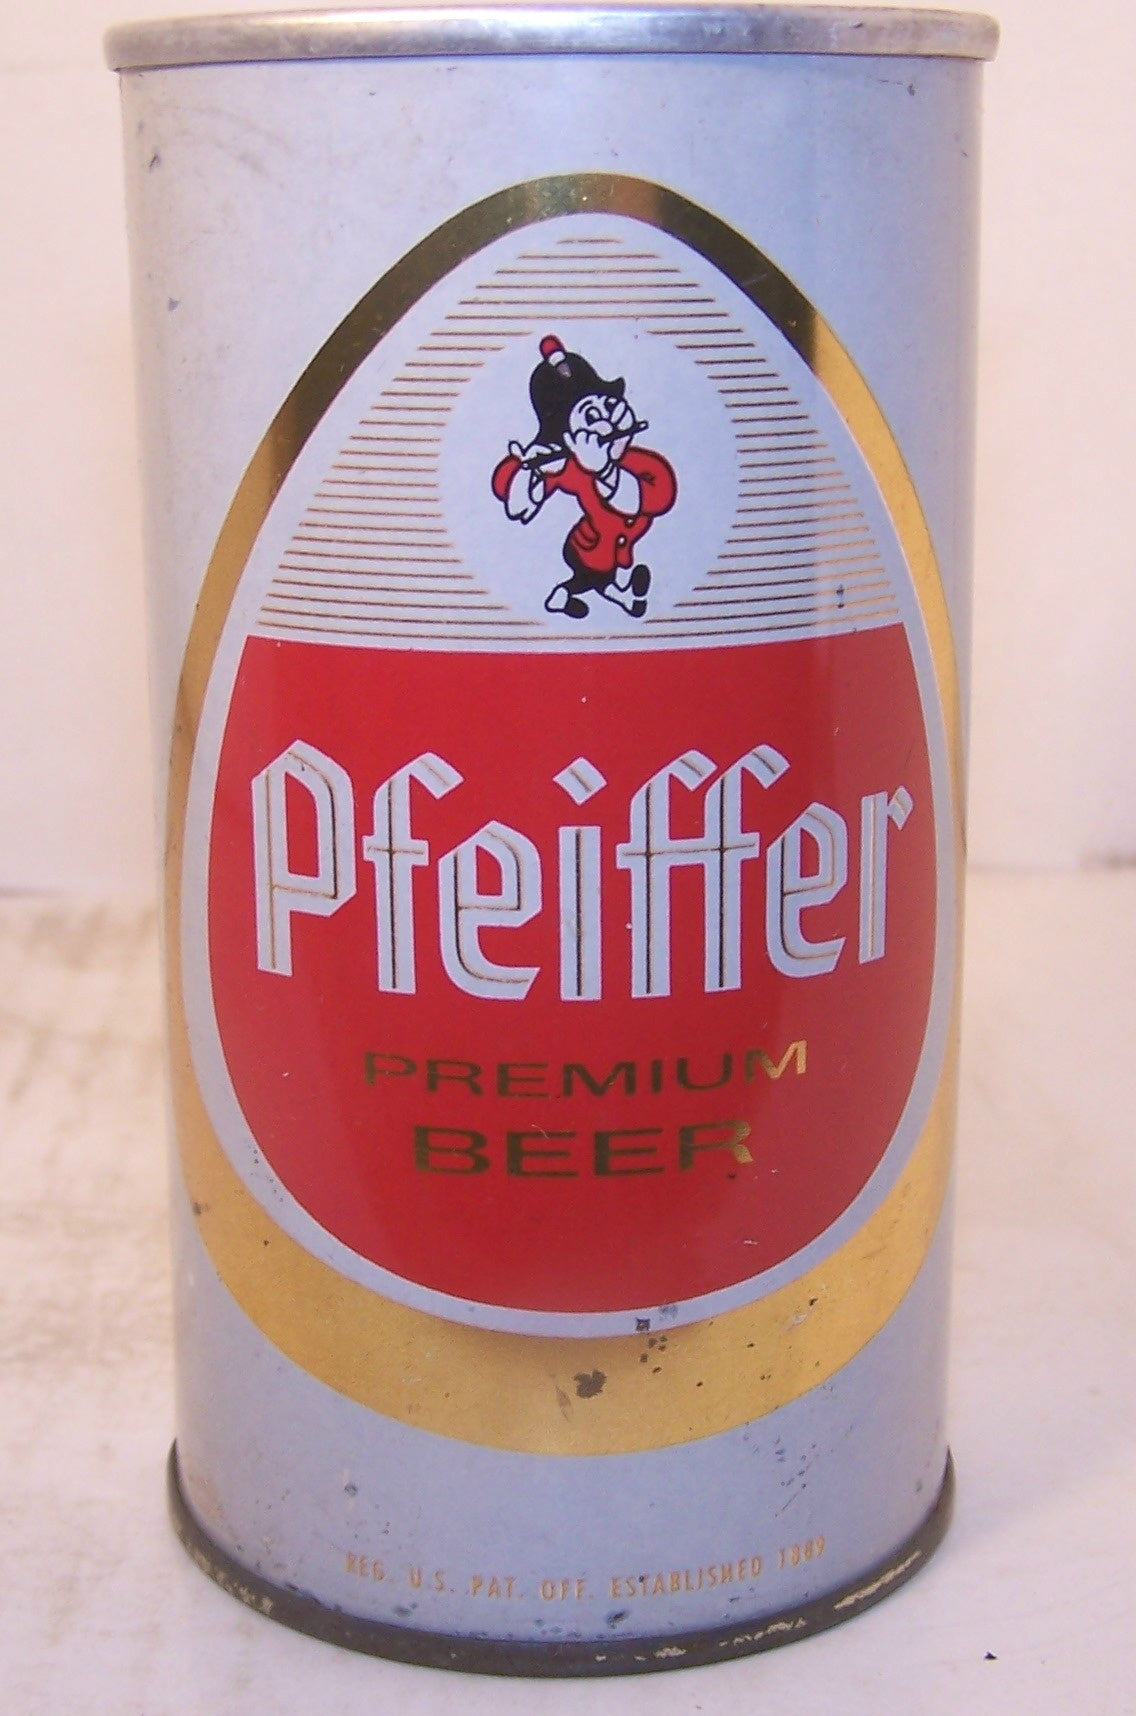 Pfeiffer premium beer, USBC II 108-15, grade 1 Sold on 5/11/15